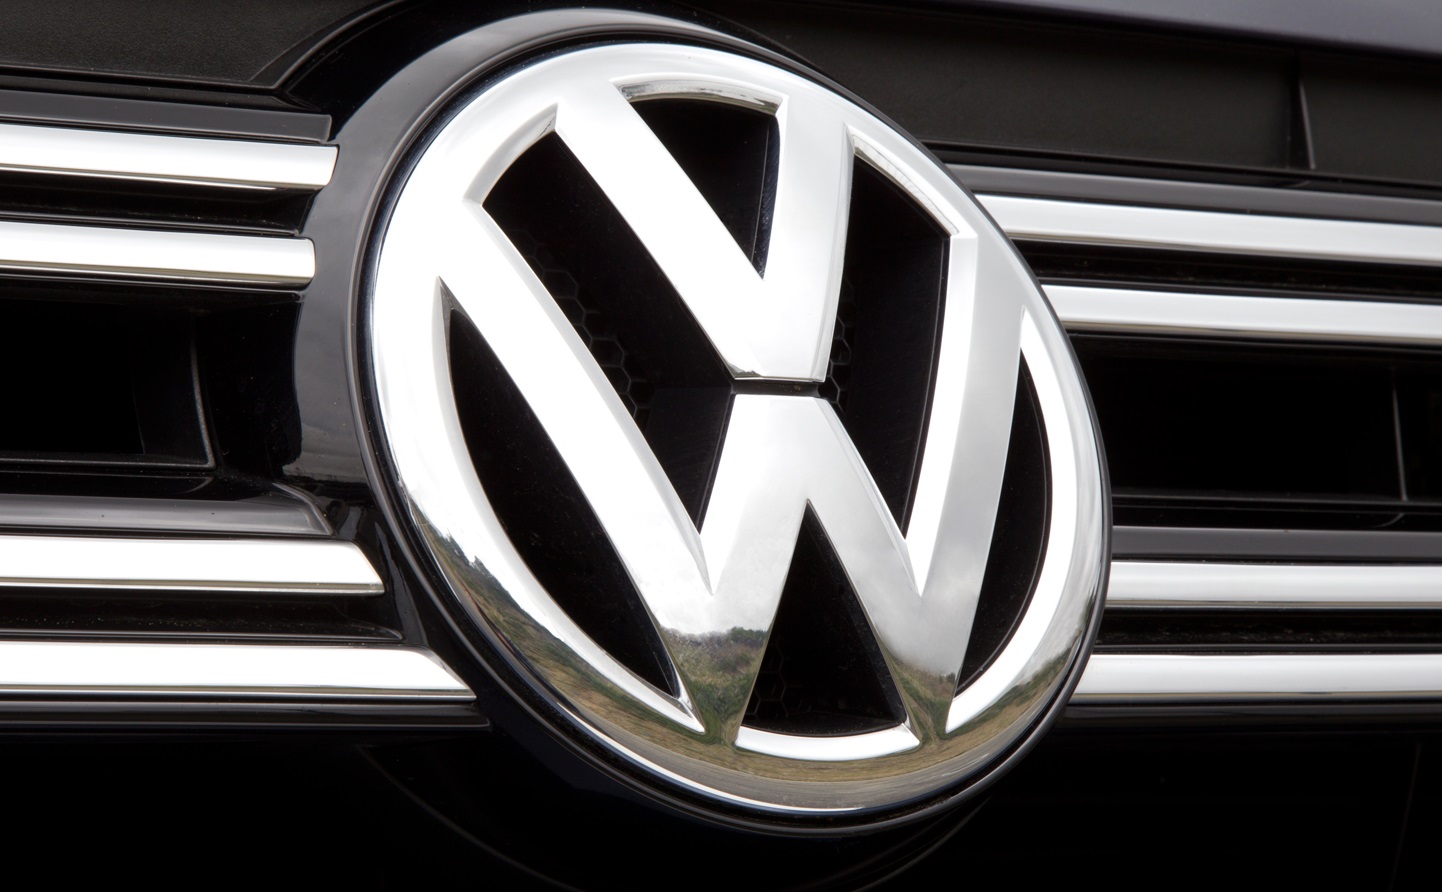 Buy LOGO VW MONOGRAM EMBLEM 12.5cm FRONT GRILL Volswagen